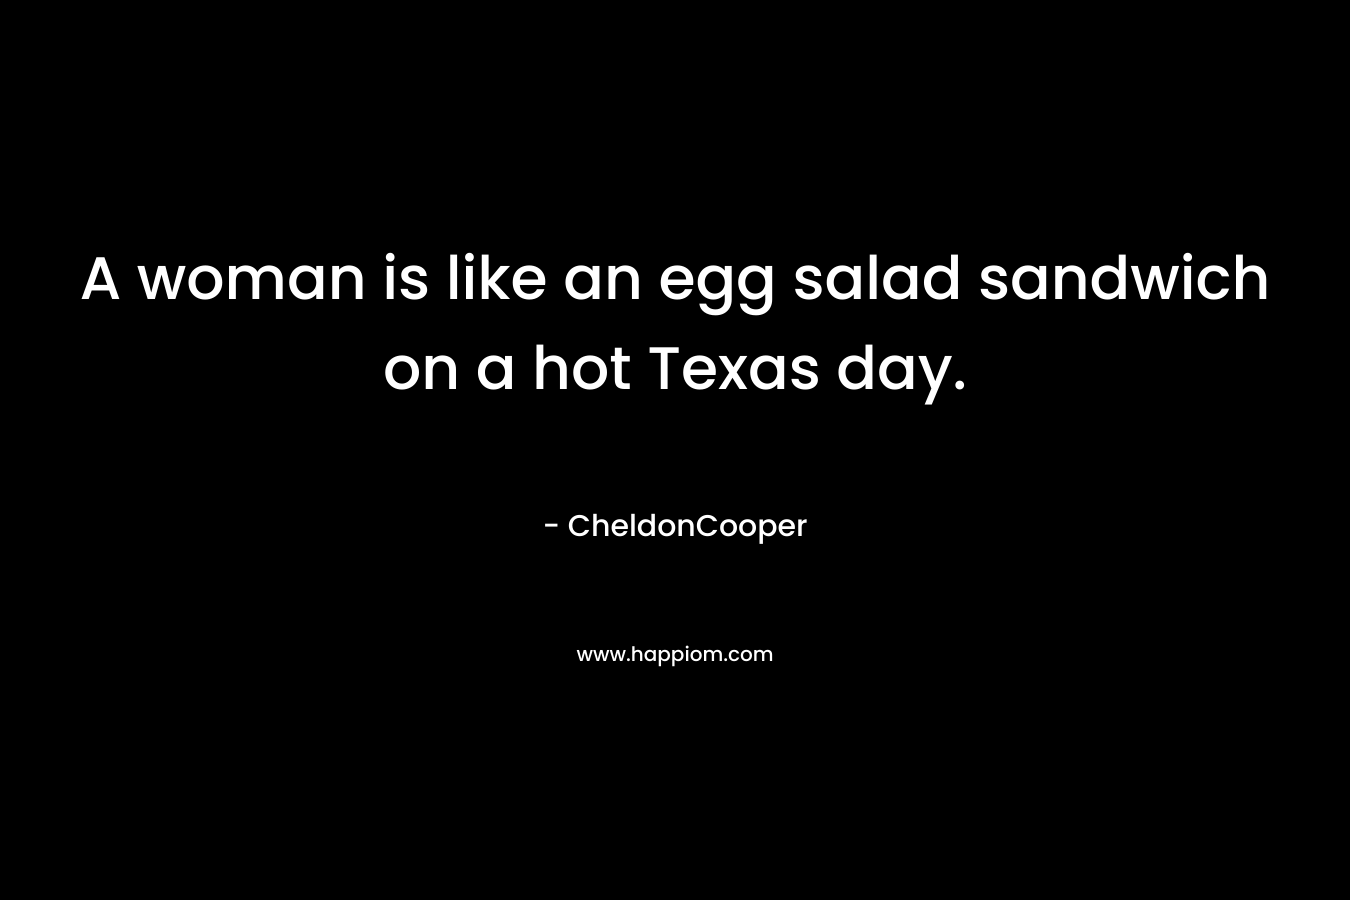 A woman is like an egg salad sandwich on a hot Texas day.